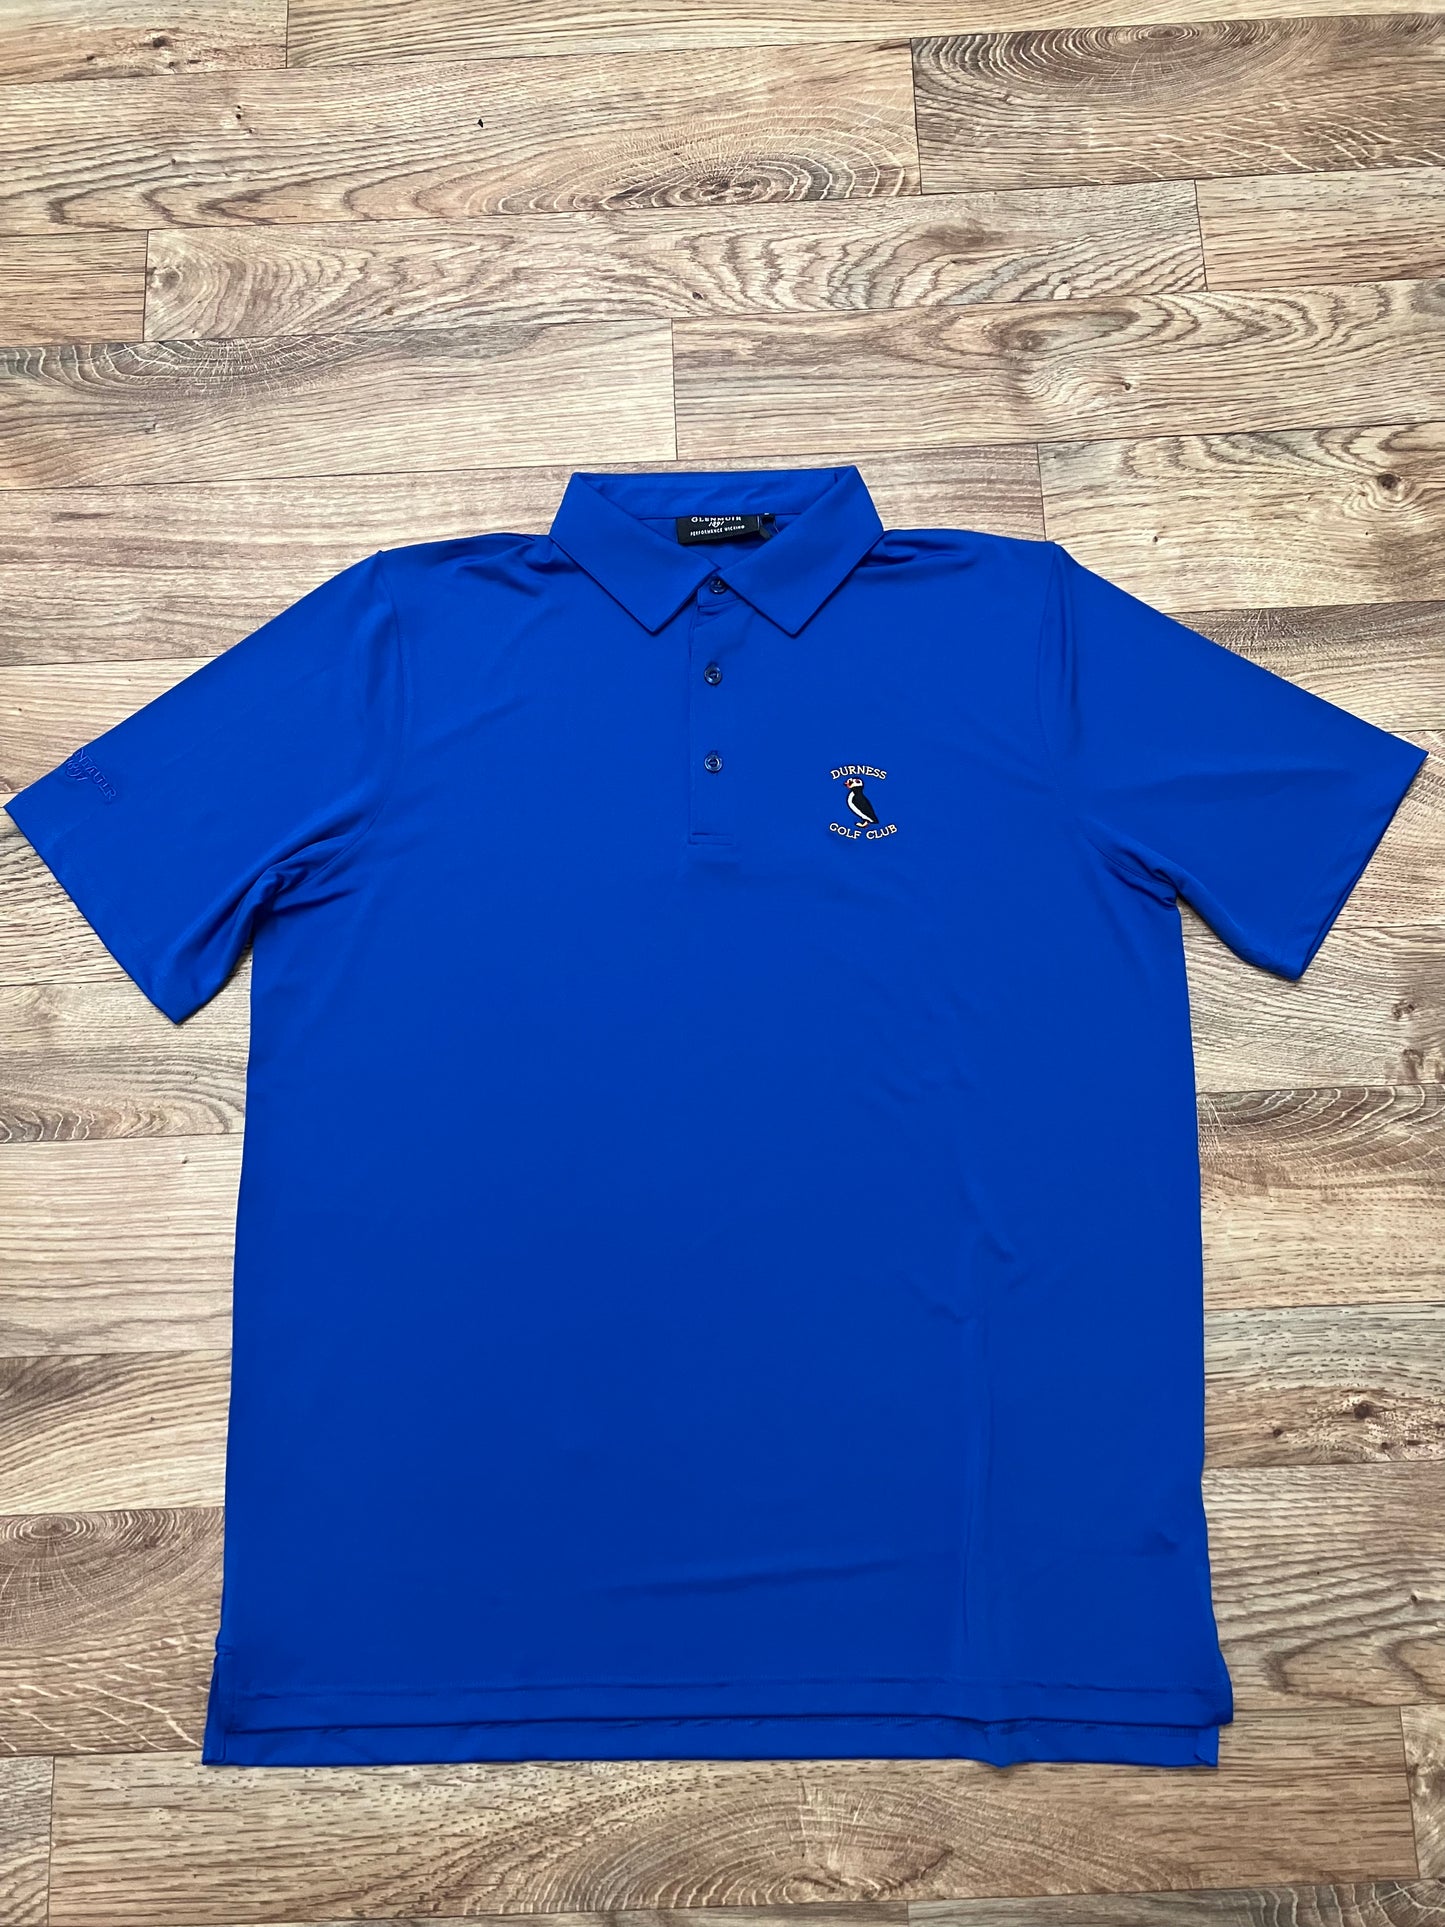 Glenmuir Silloth Mens Tailored Collar Performance Golf Shirt